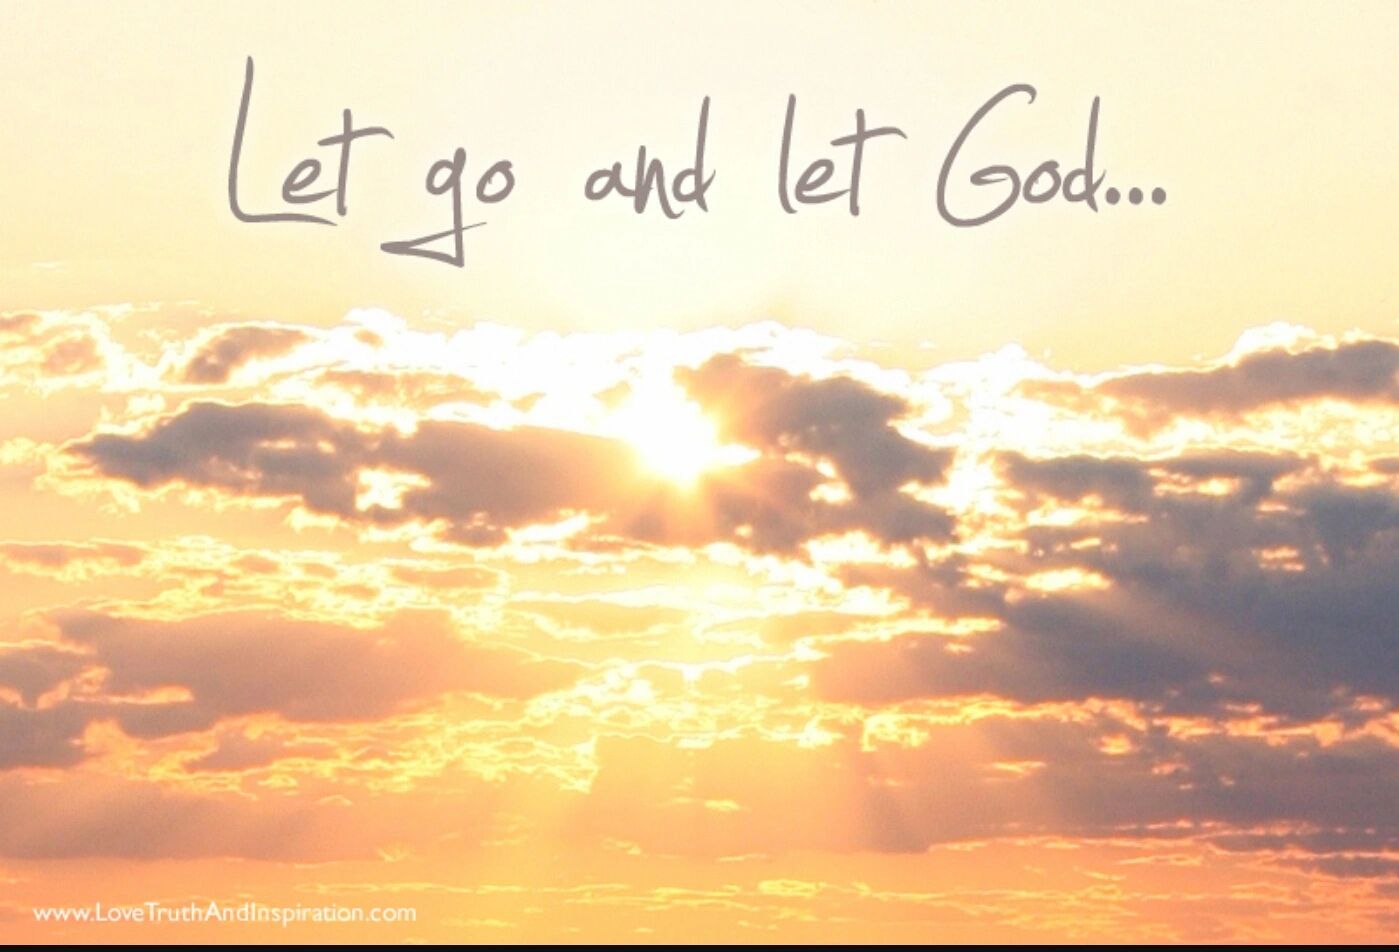 Let god chavo. Let Бог. Let go and Let God. God is in Control. For the Love of God Surrender.